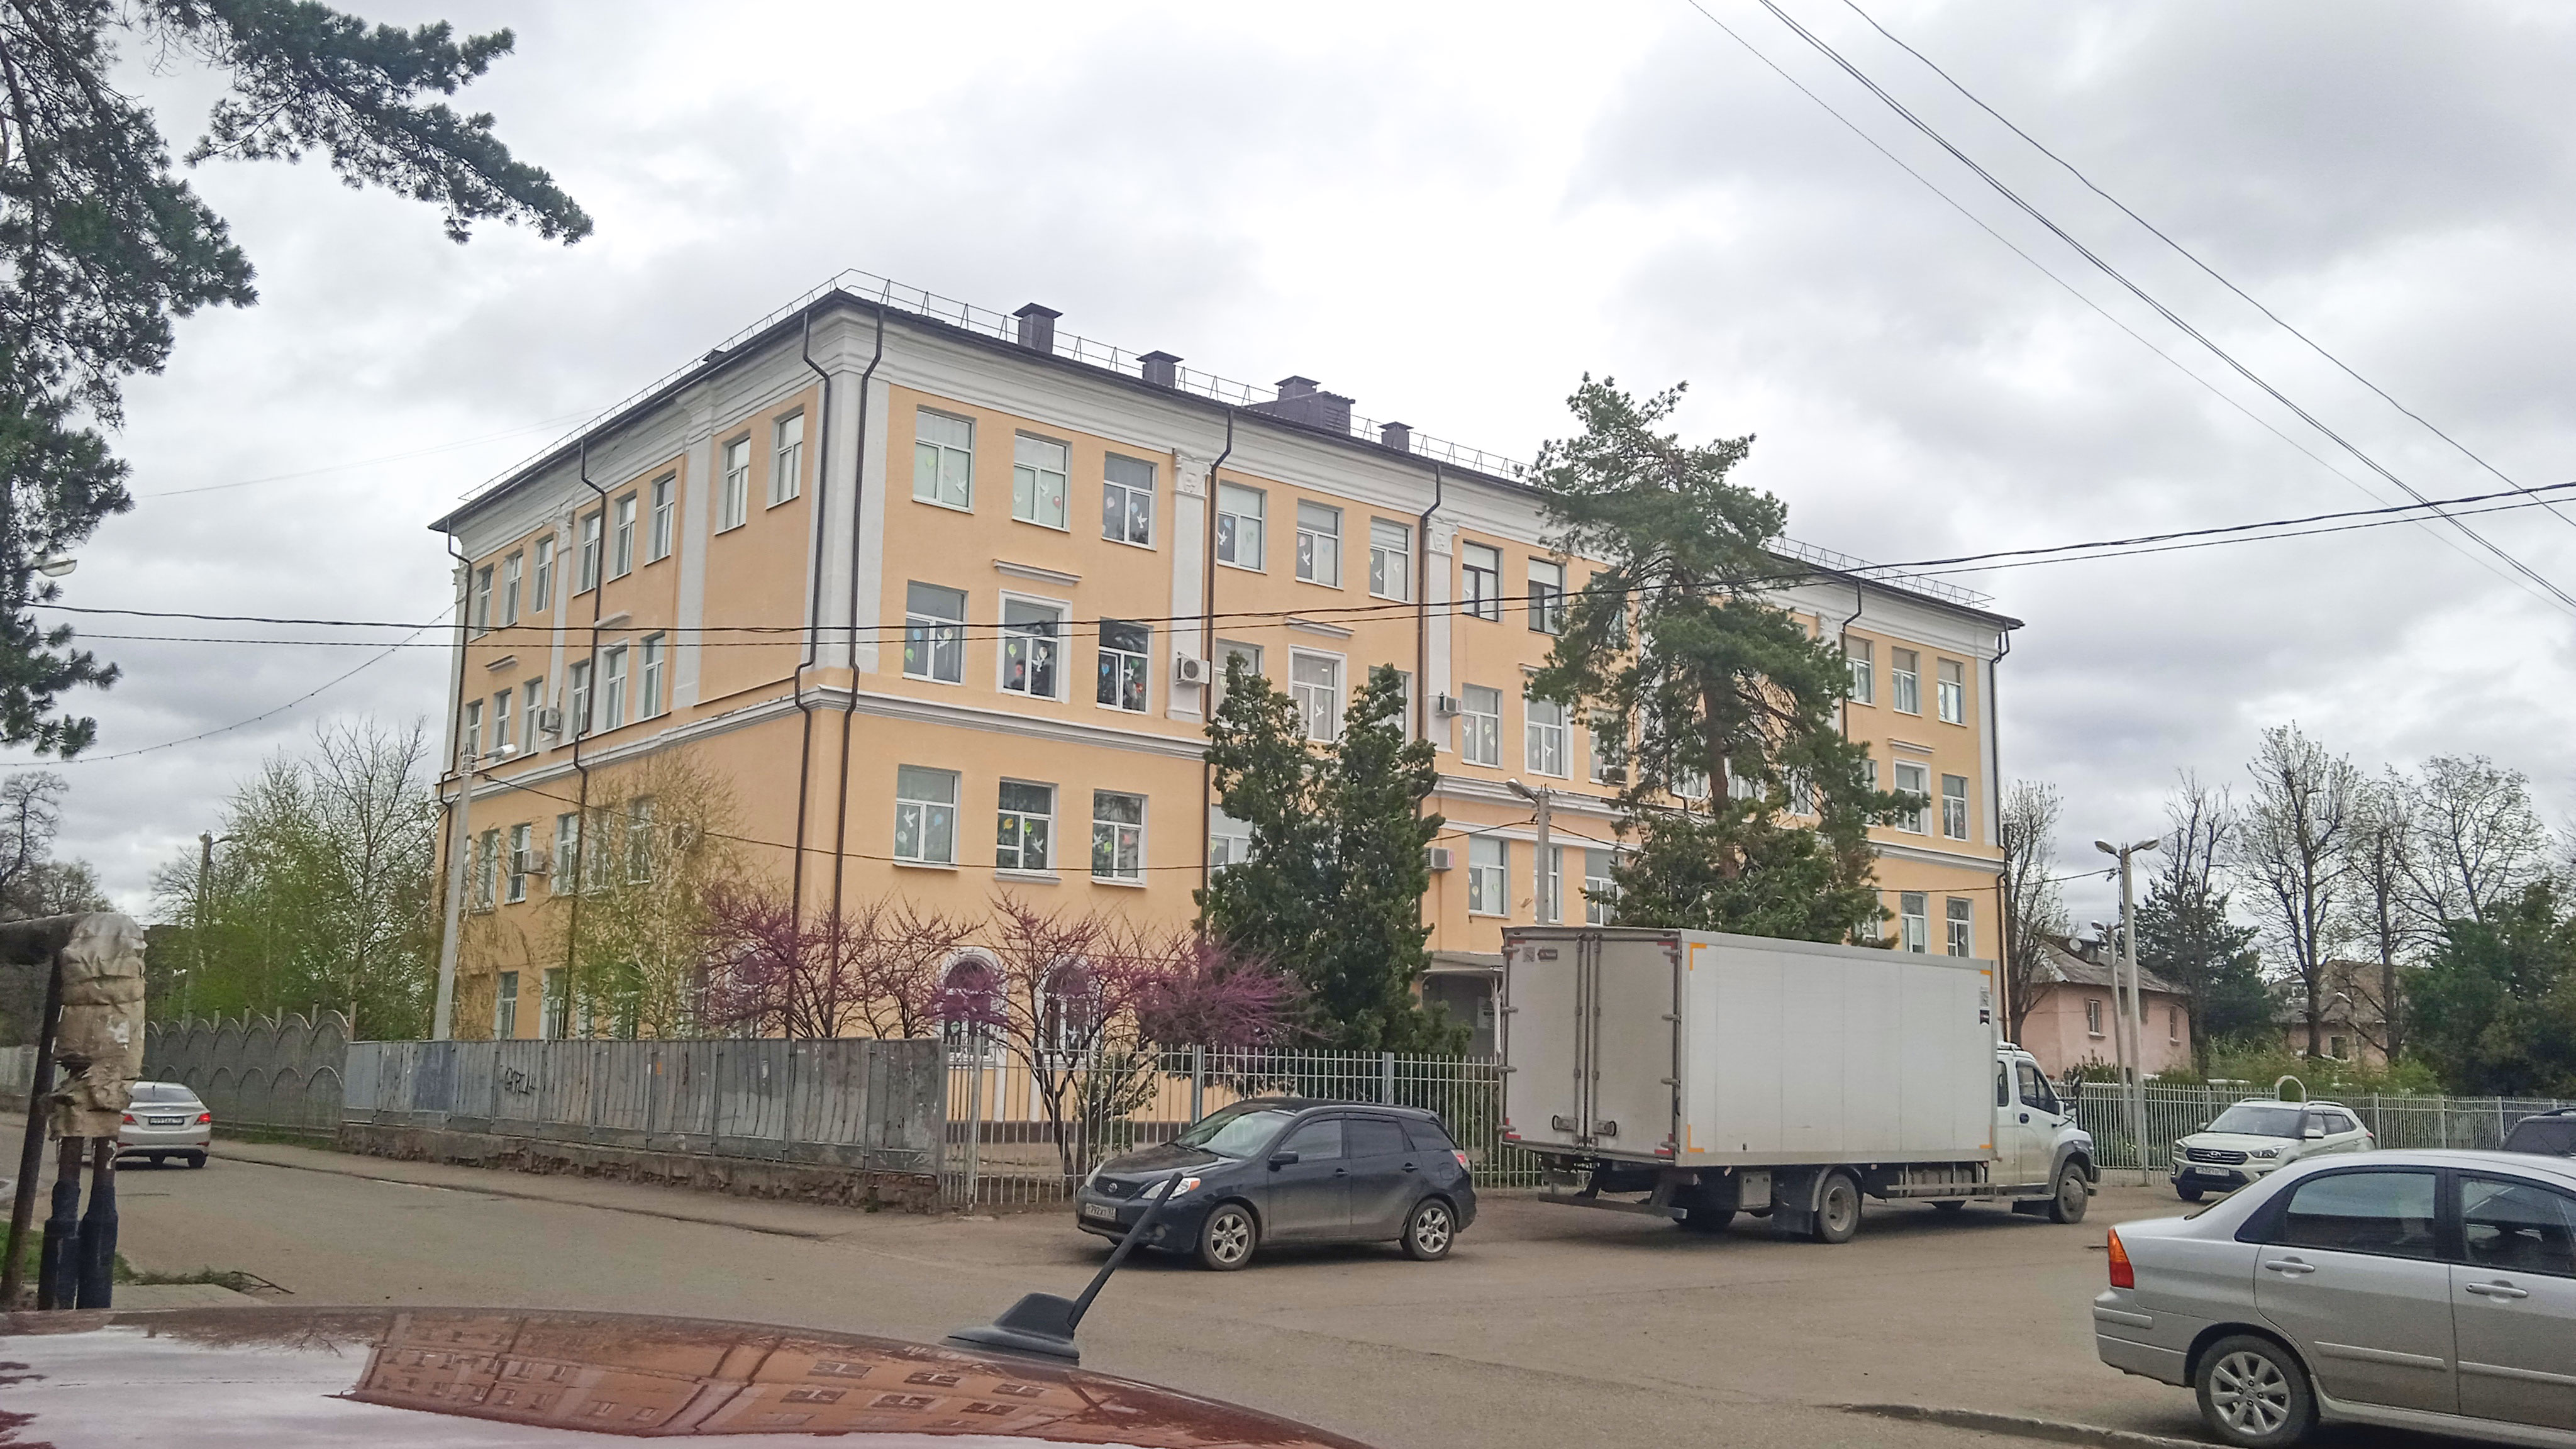 Обзор здания школы №53 г. Краснодар.